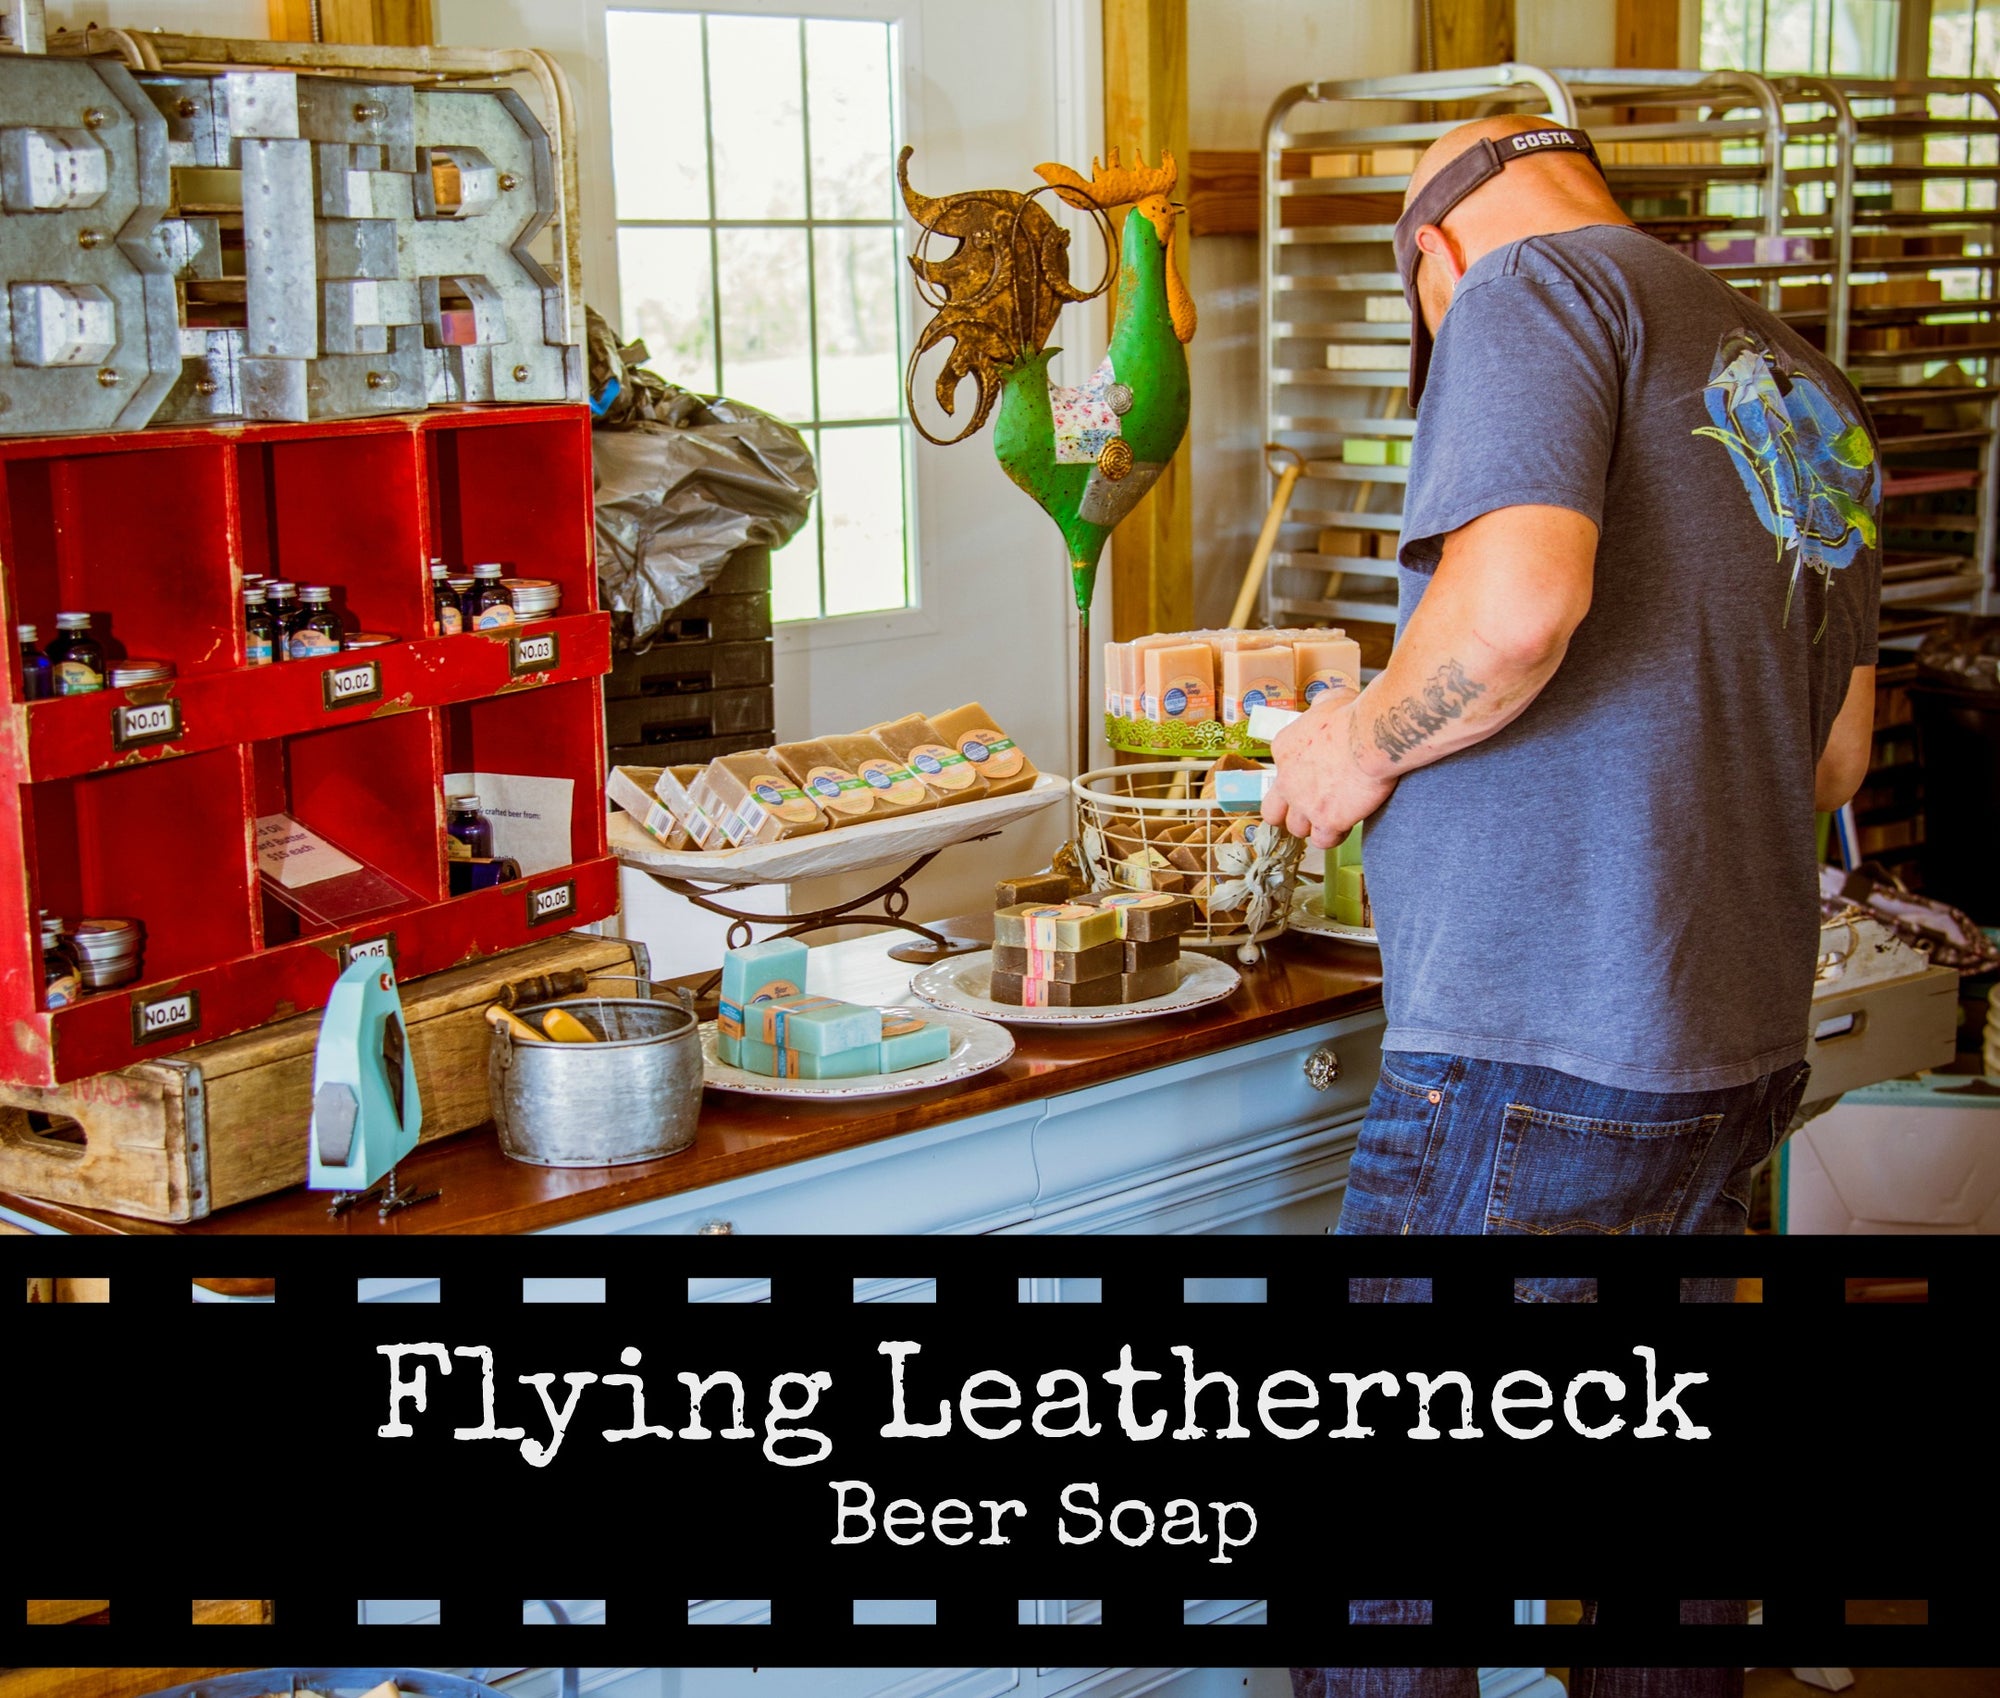 Flying Leatherneck Handcrafted Beer Soap